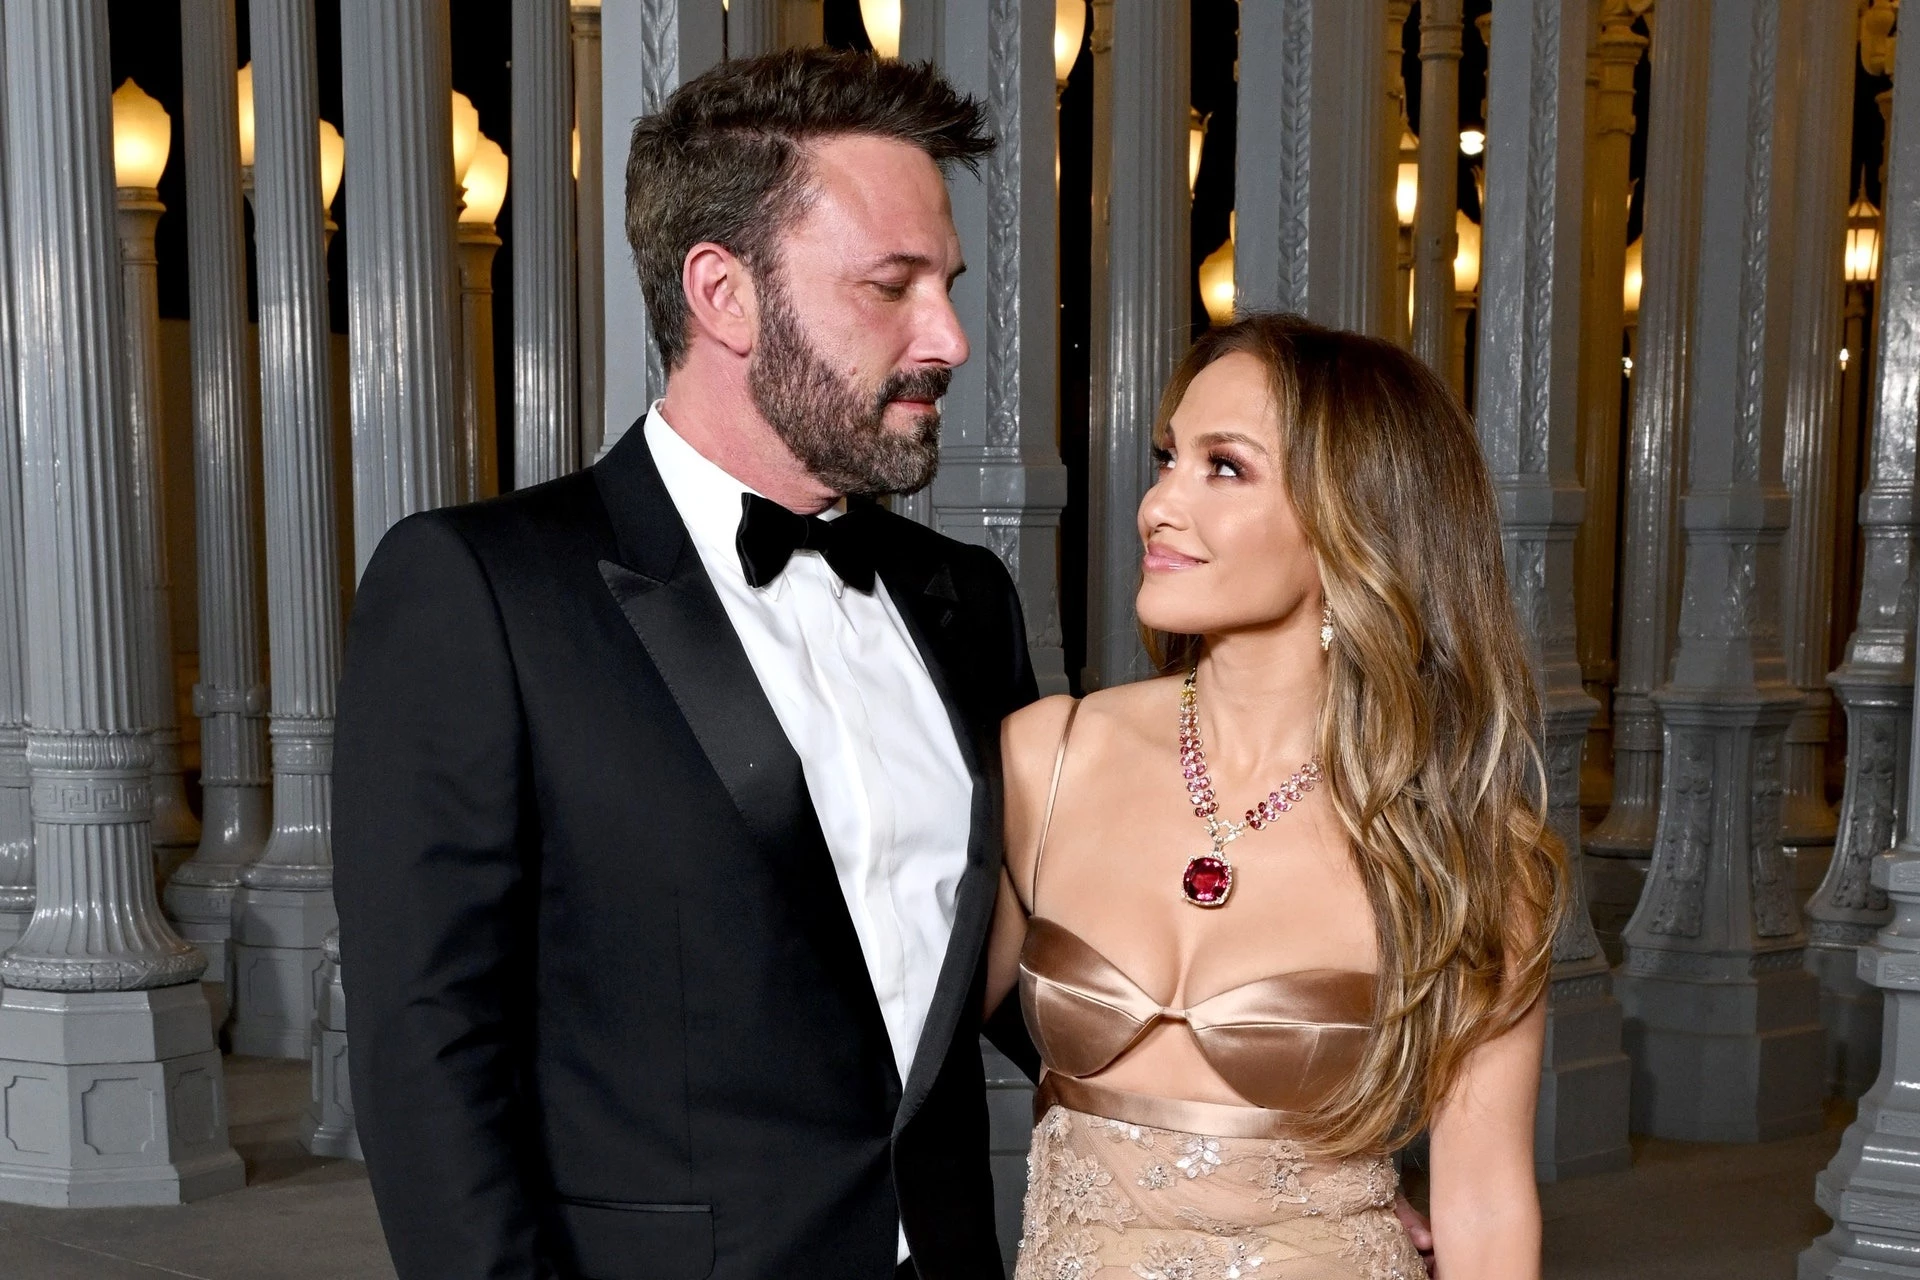 Ben Affleck and Jennifer Lopez's romance